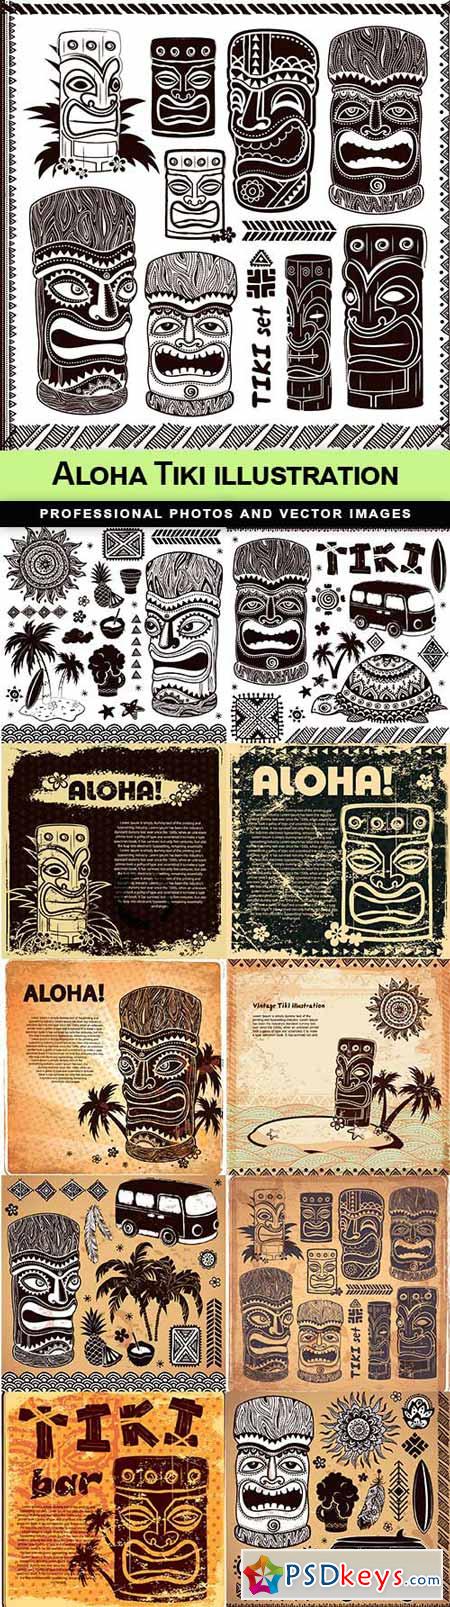 Aloha Tiki illustration - 11 EPS